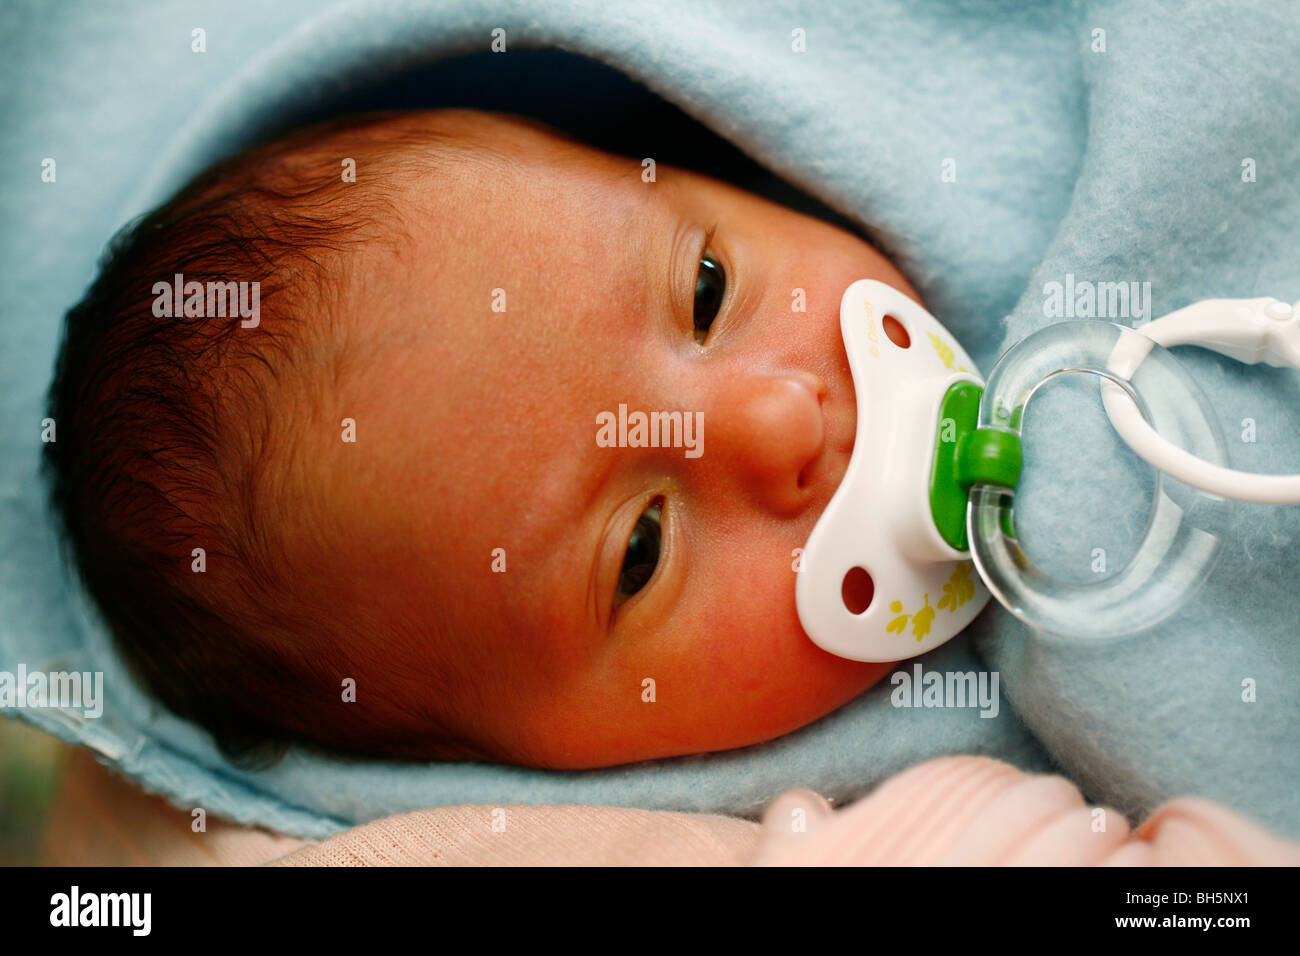 New Born Baby boy Foto Stock